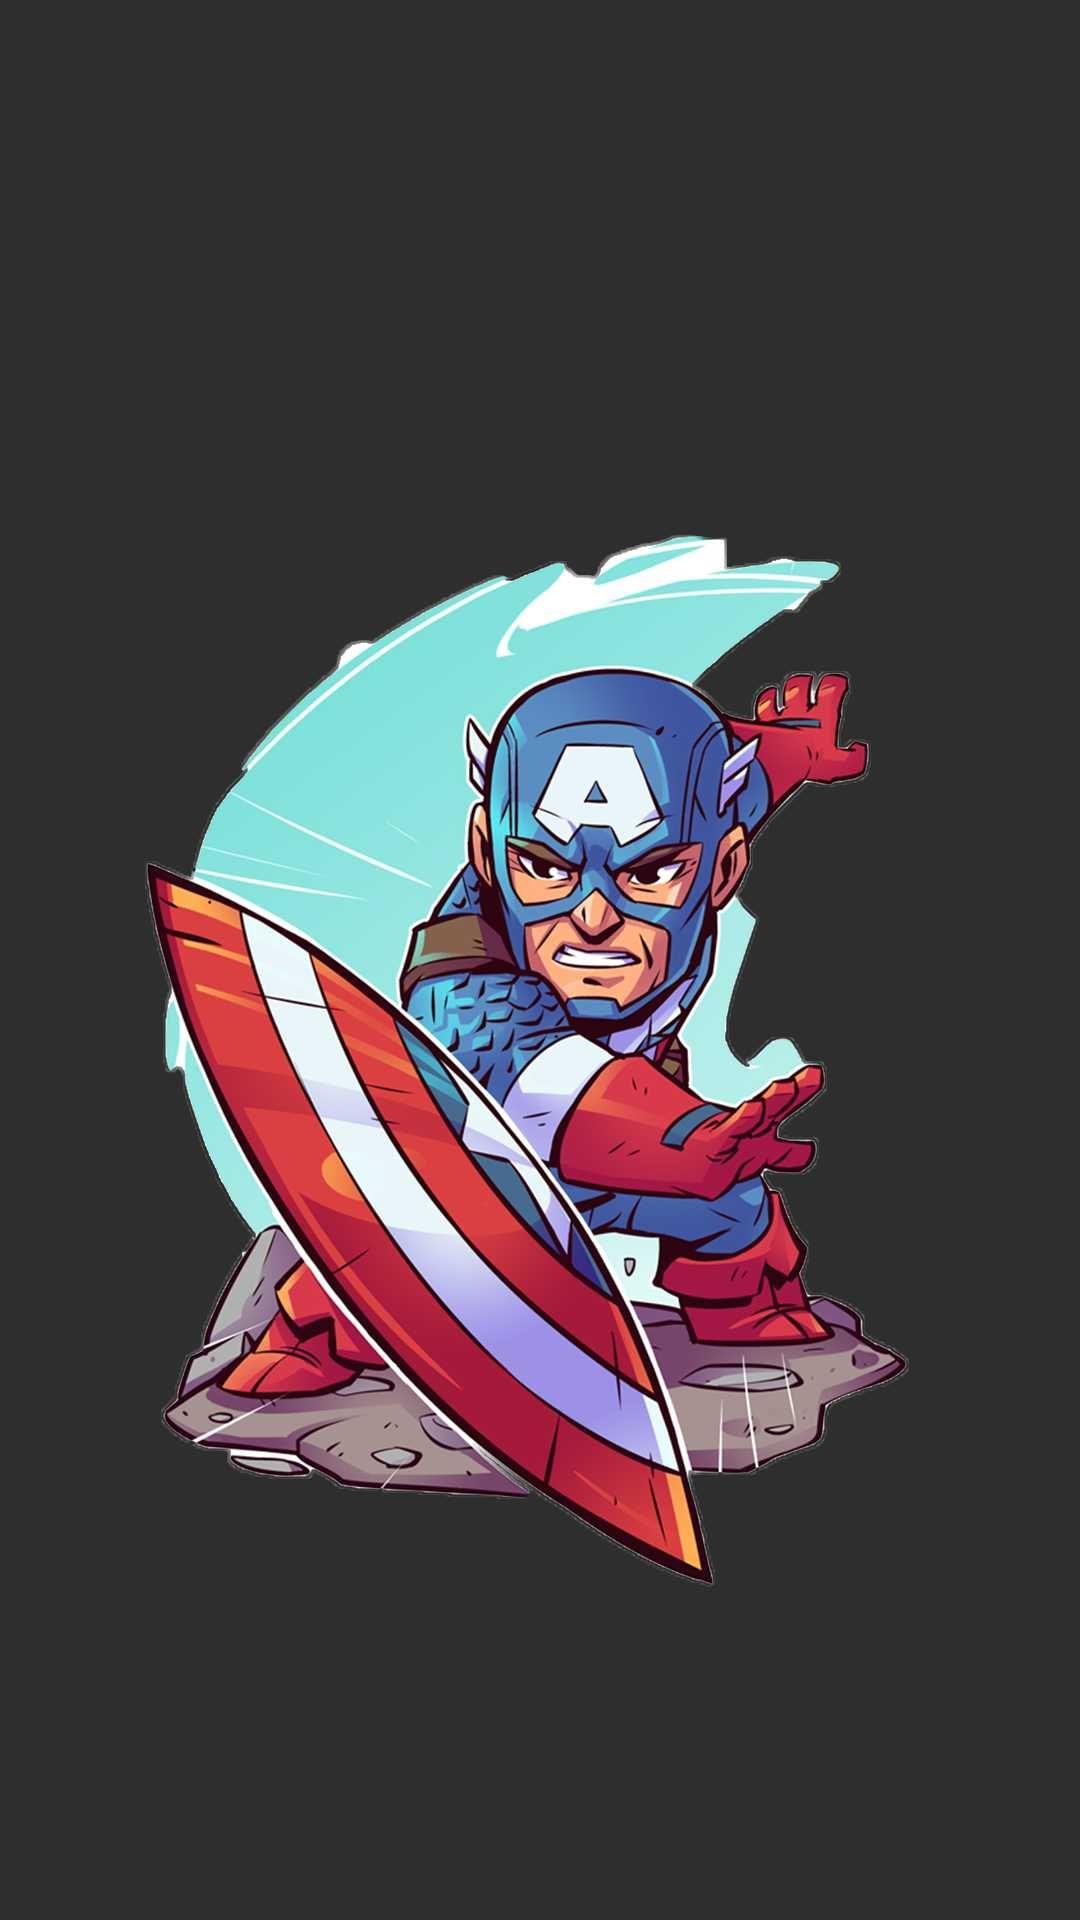 Captain America Animated Art iPhone Wallpaper. Marvel comics wallpaper, Superhero wallpaper, Chibi marvel